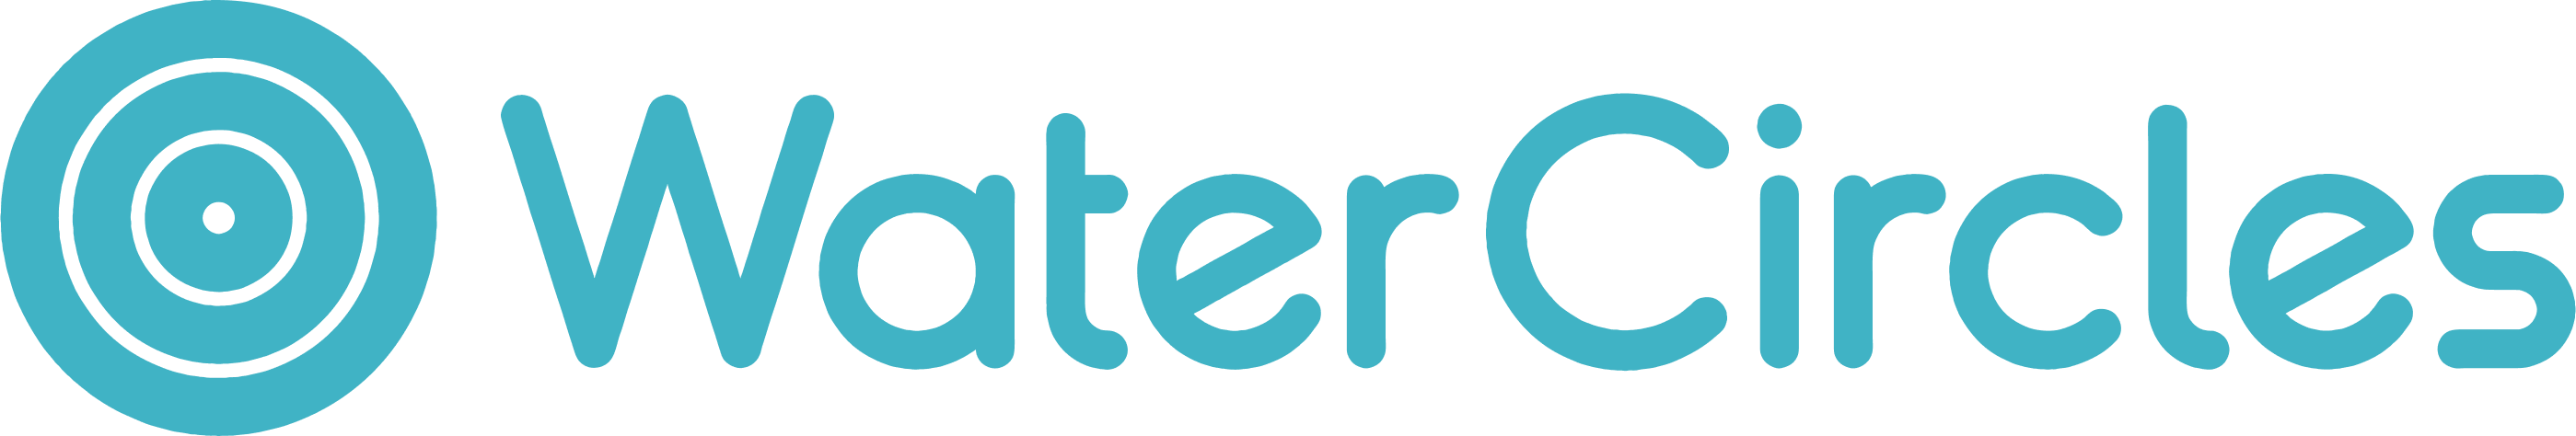 WaterCircles veihjelp logo